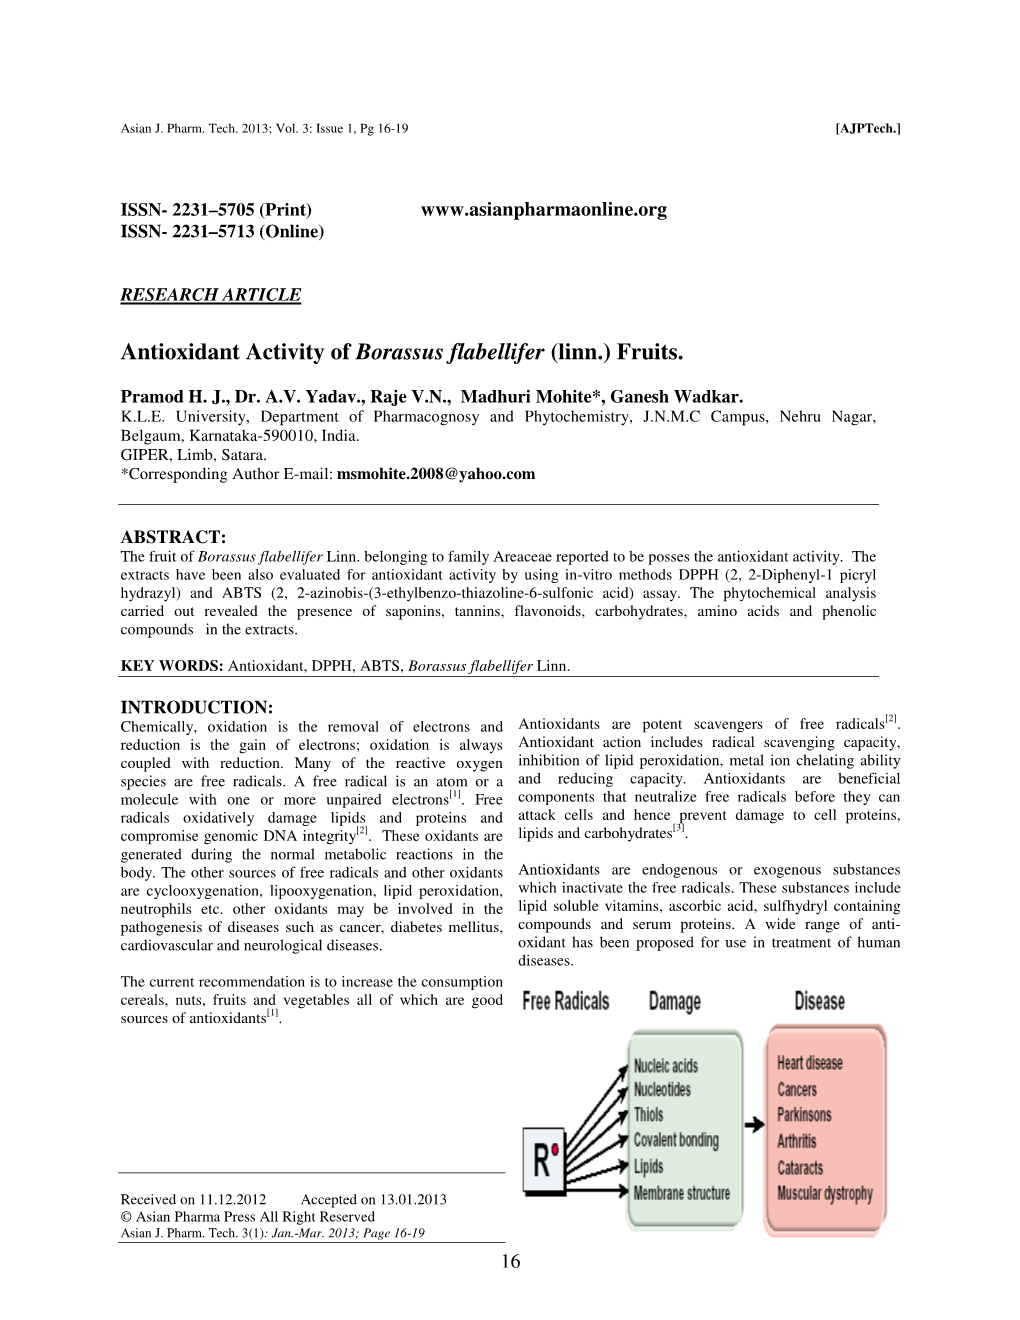 Antioxidant Activity of Borassus Flabellifer (Linn.) Fruits